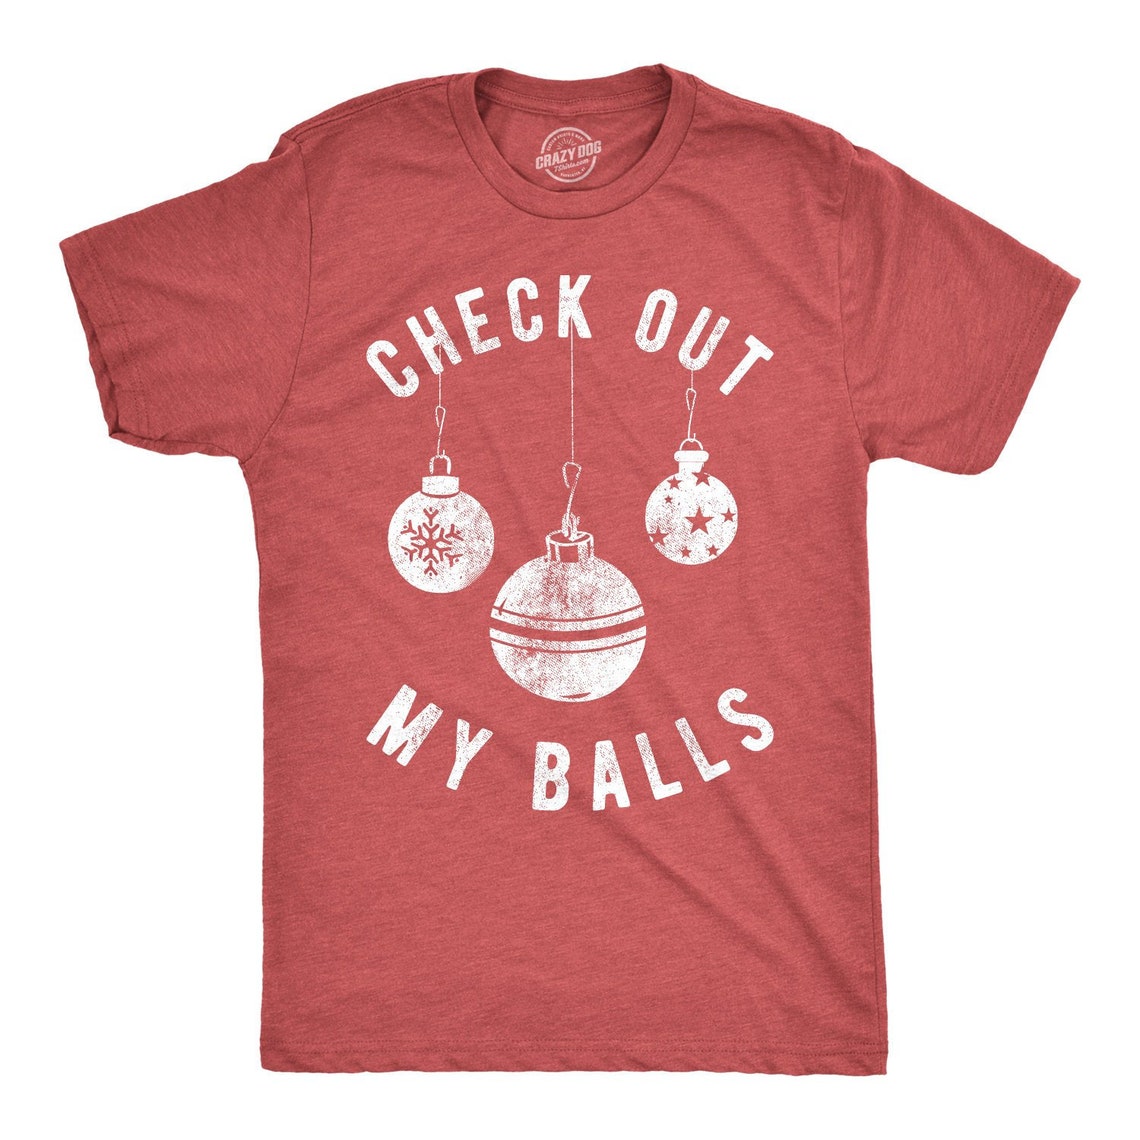 Check Out My Balls, Christmas Bauble Shirt, Funny T Shirt Xmas, Offensive Xmas Gifts, Funny Sarcastic Christmas Tees